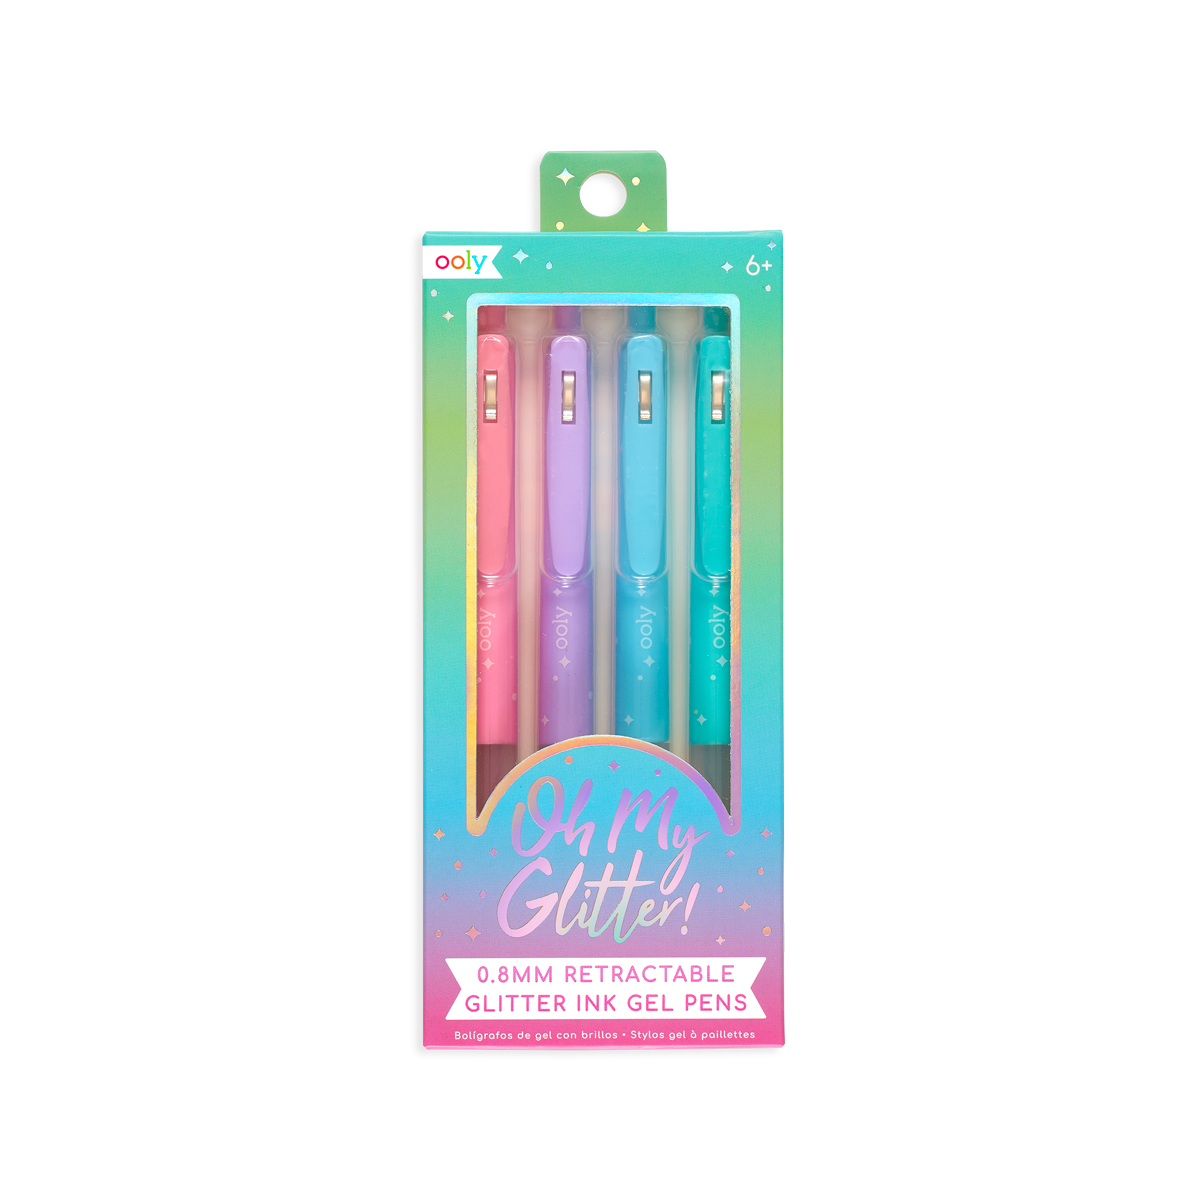 OOLY Oh My Glitter! Retractable Gel Pens set of 4 in packaging